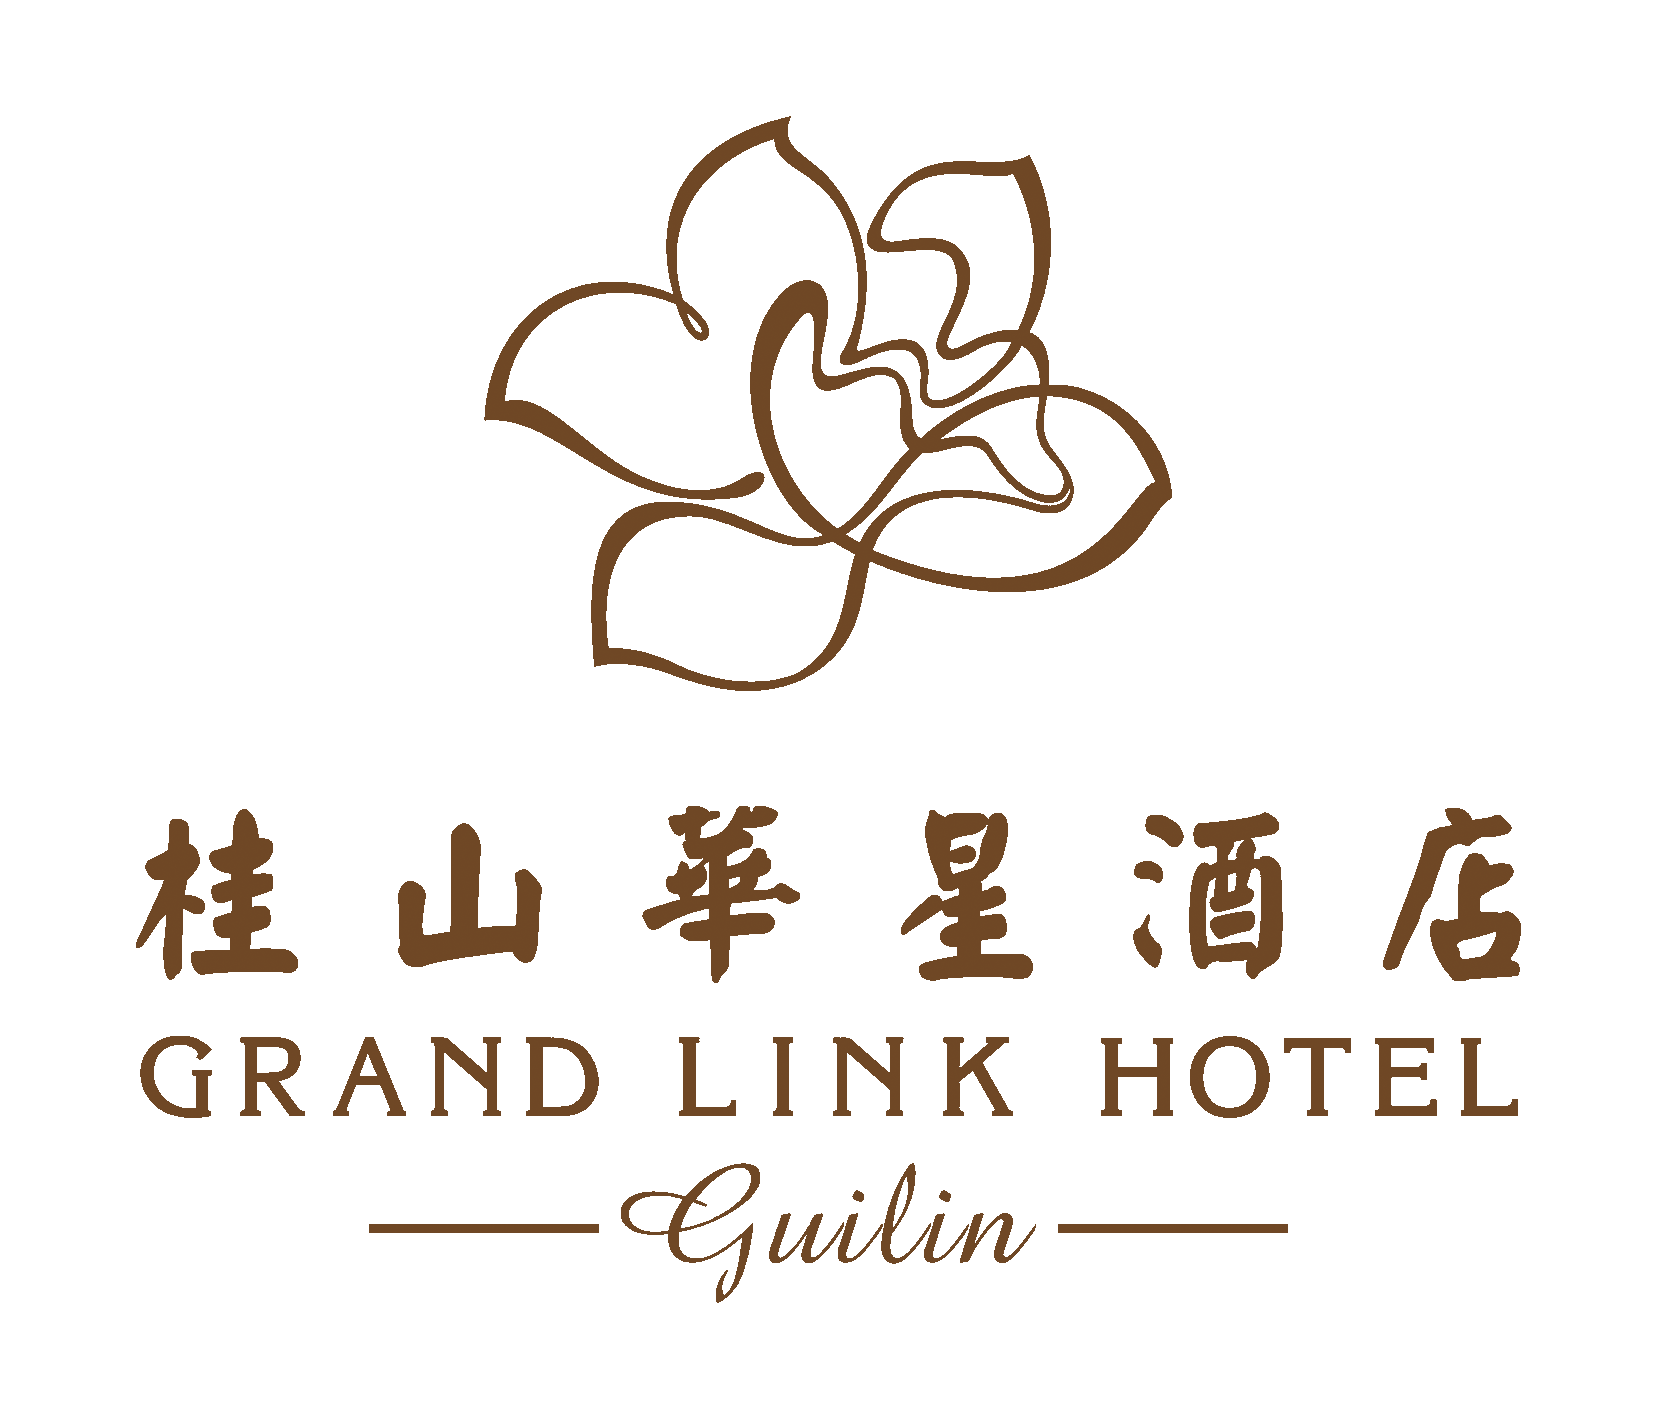 Grand Link Hotel